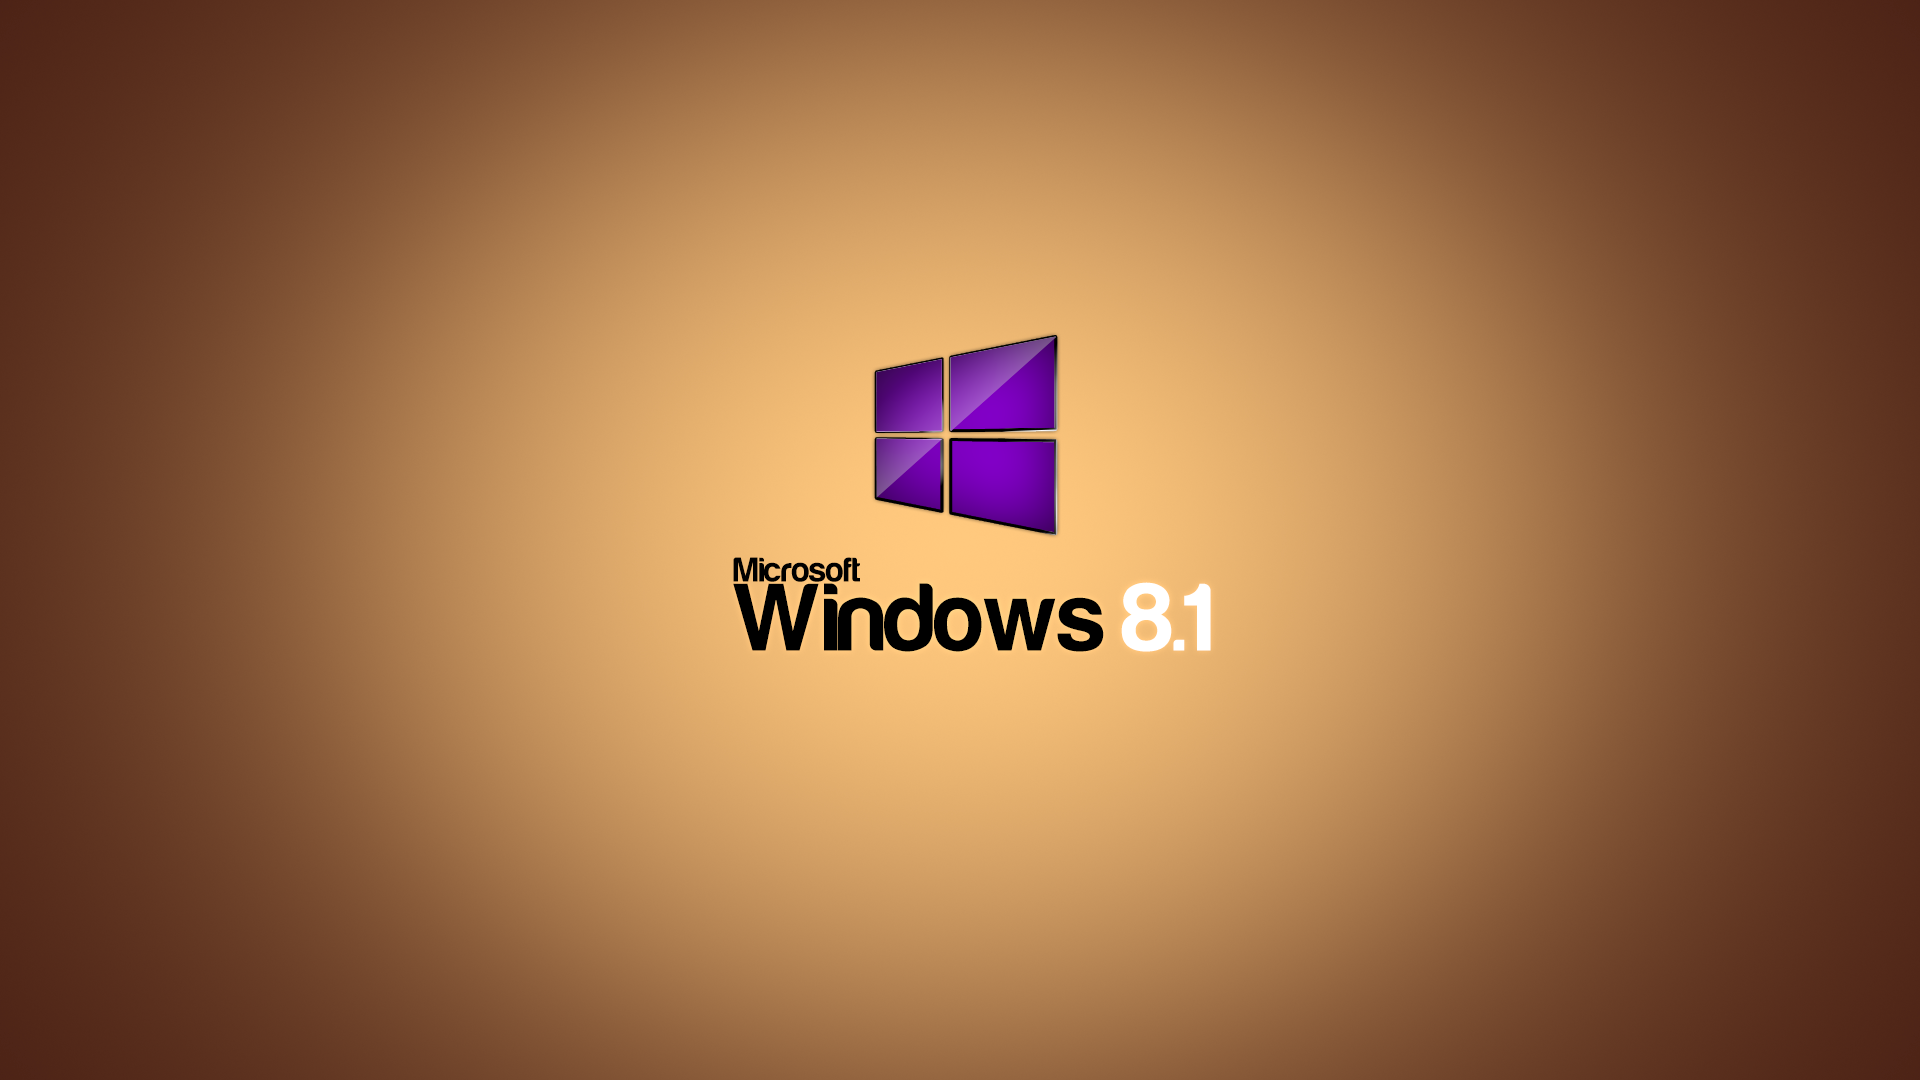 Windows 8.1 wallpaper by karara160 on DeviantArt Full Hd Wallpapers For Windows 8 1920x1080